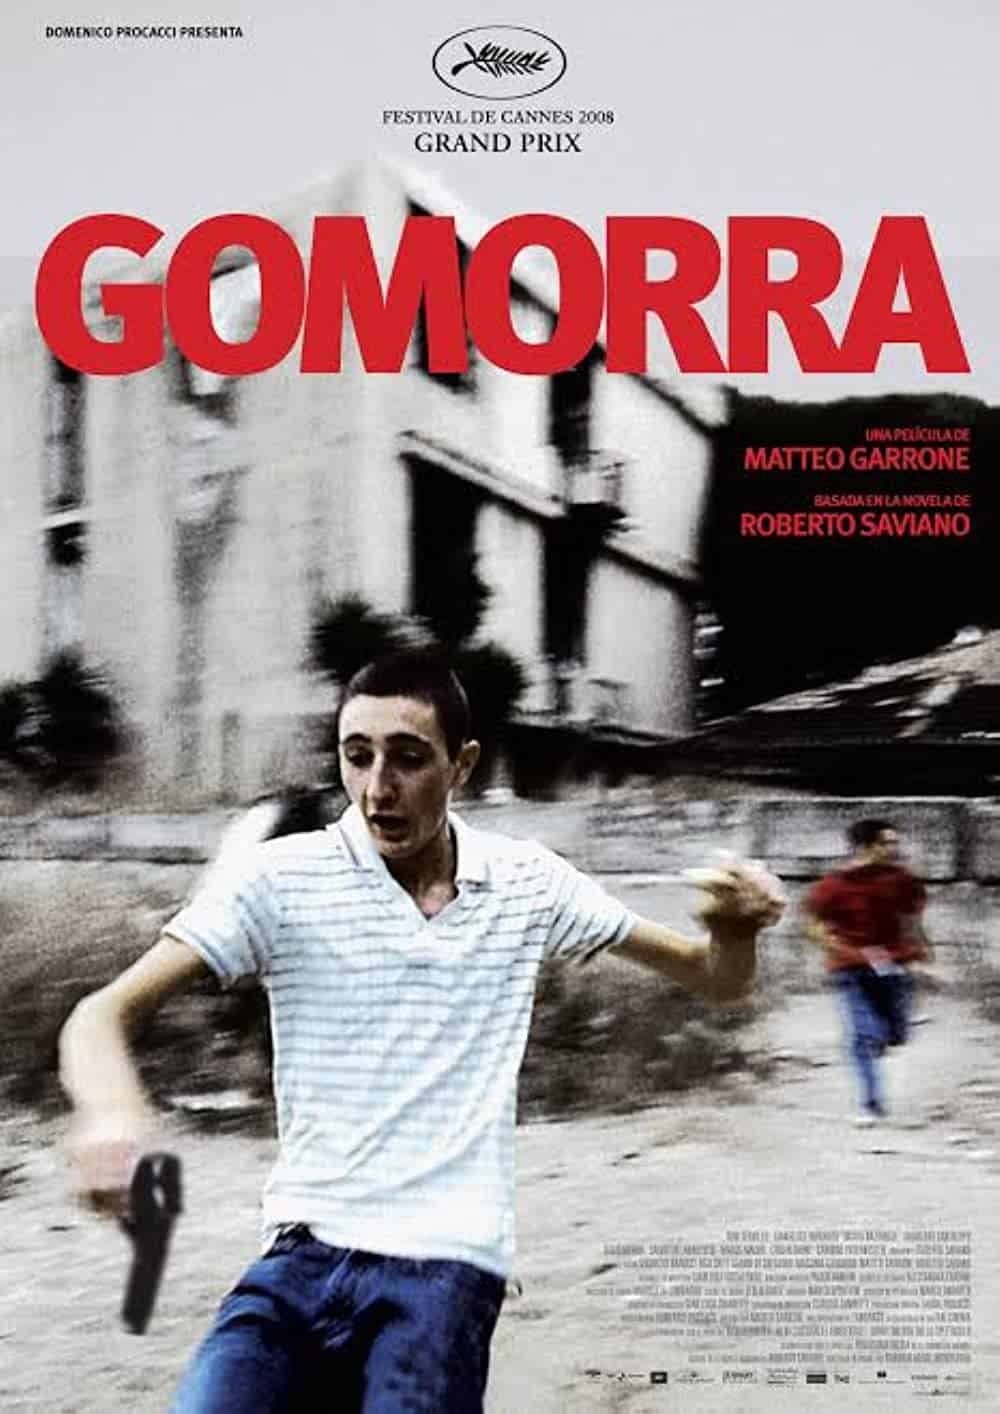 Gomorrah (2008) Best Italian Mafia Movies to Add in Your Watchlist